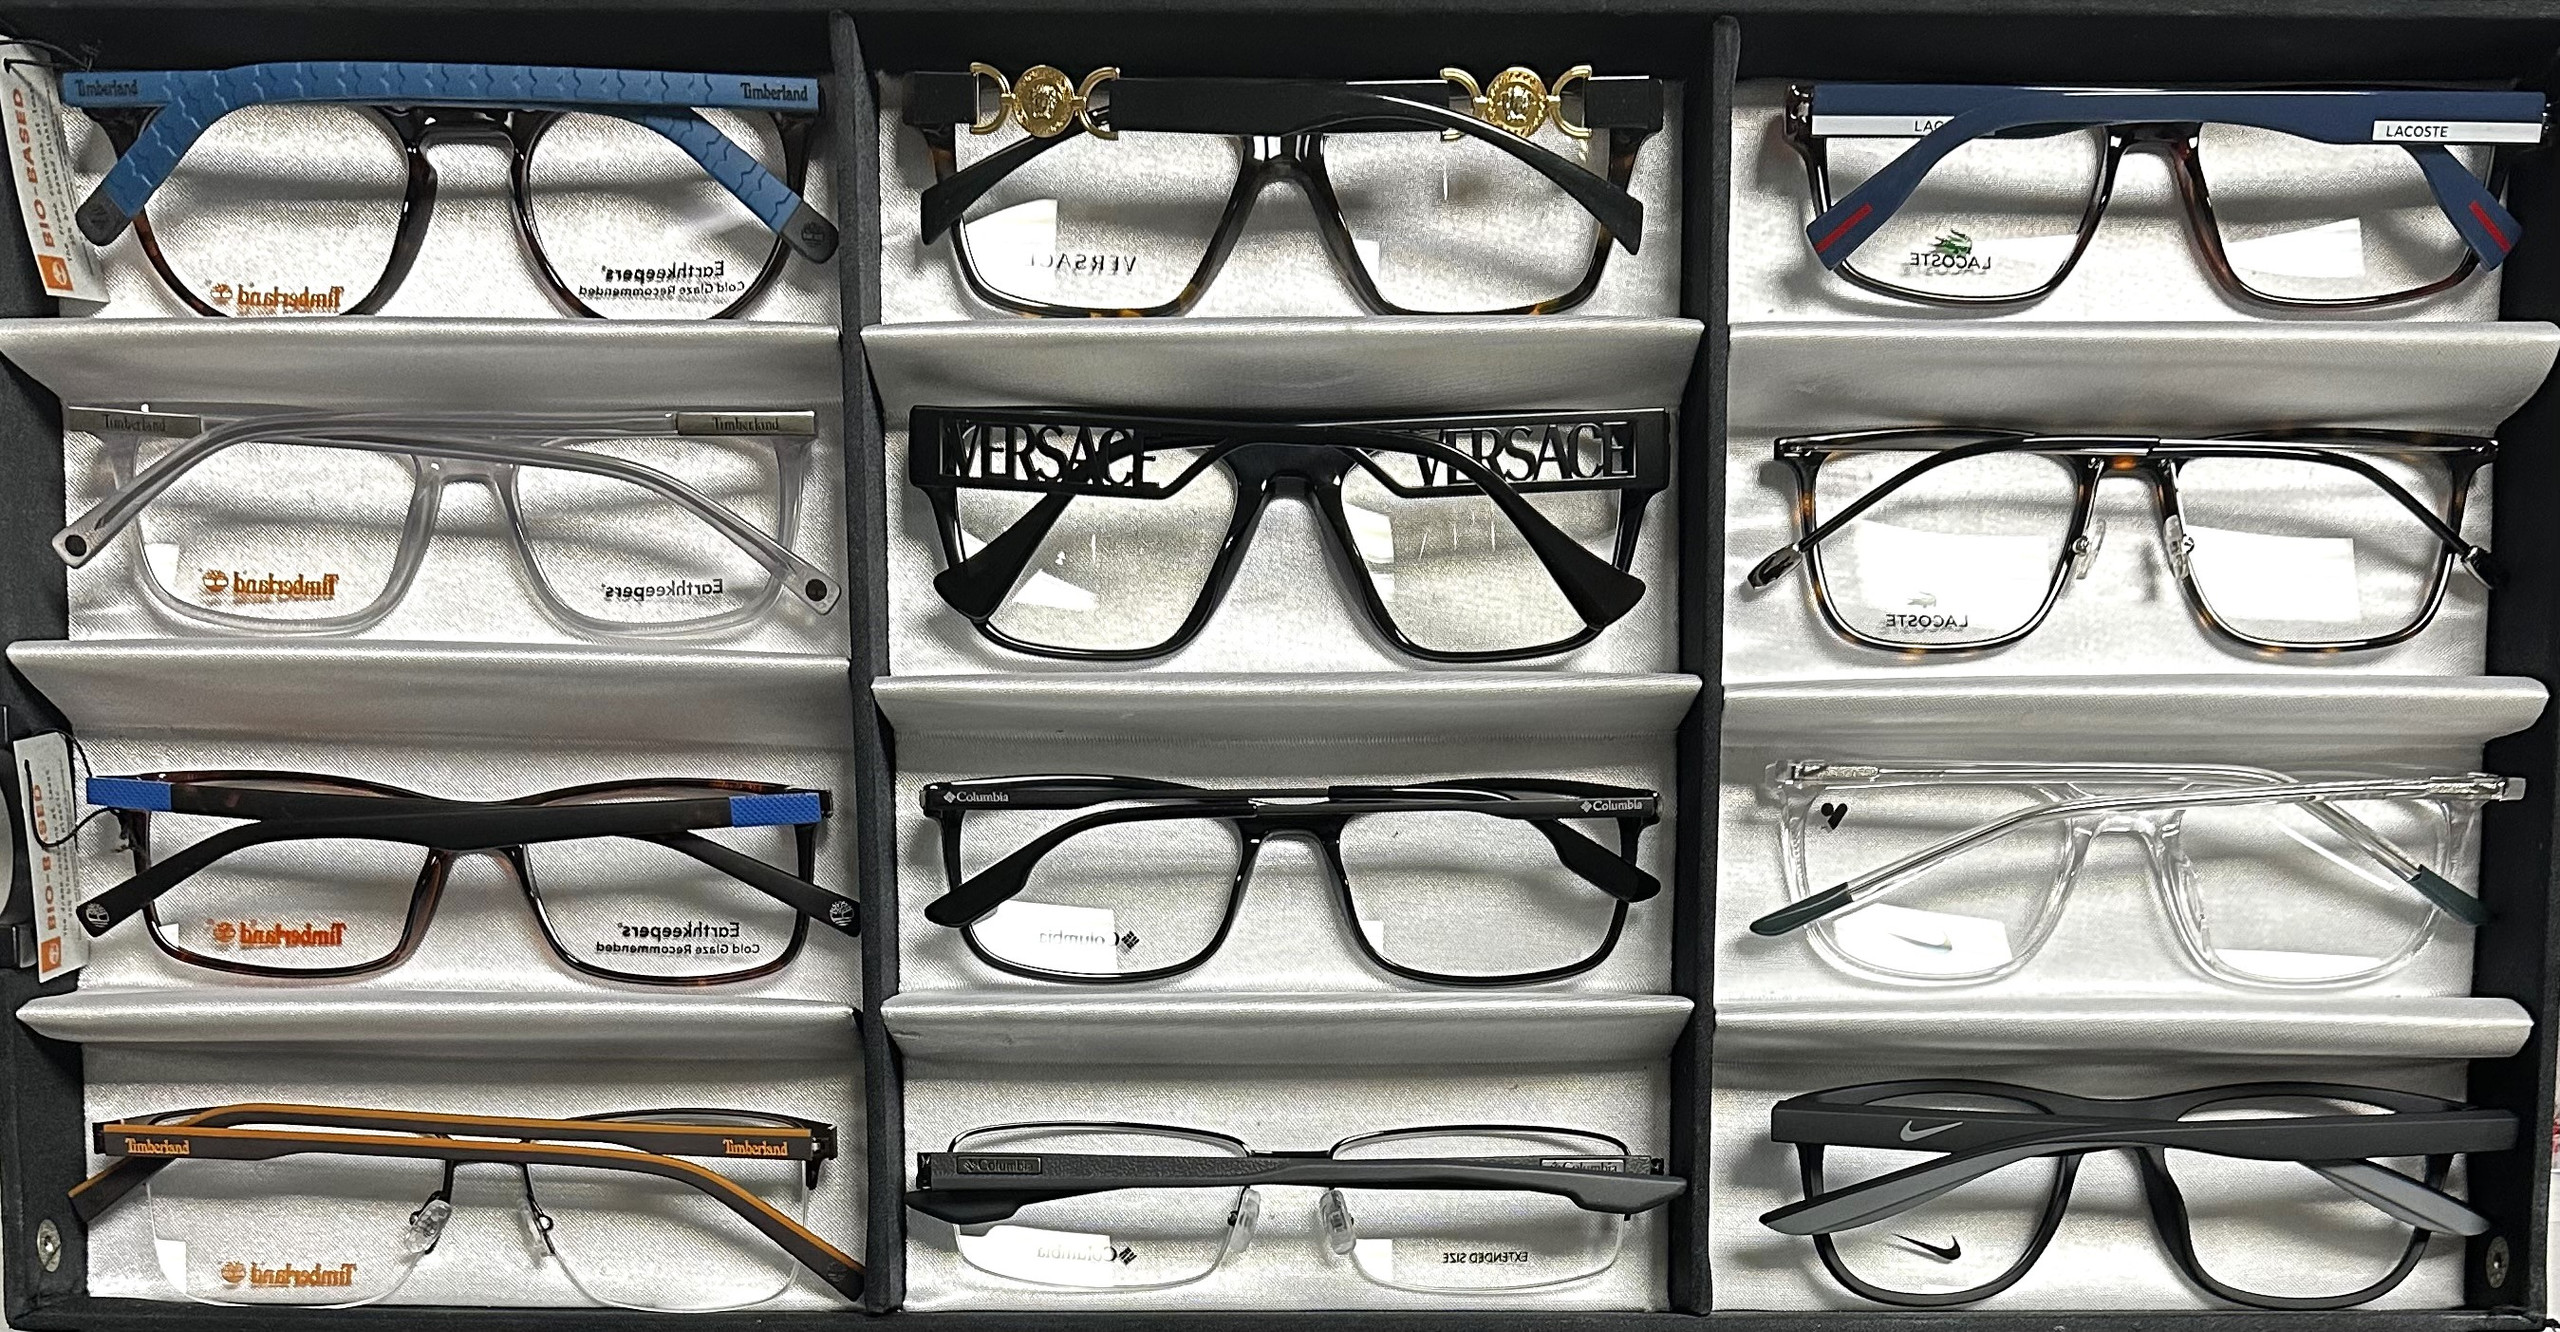 Wholesale Eyeglasses | Designer Brand Sunglasses and Frames